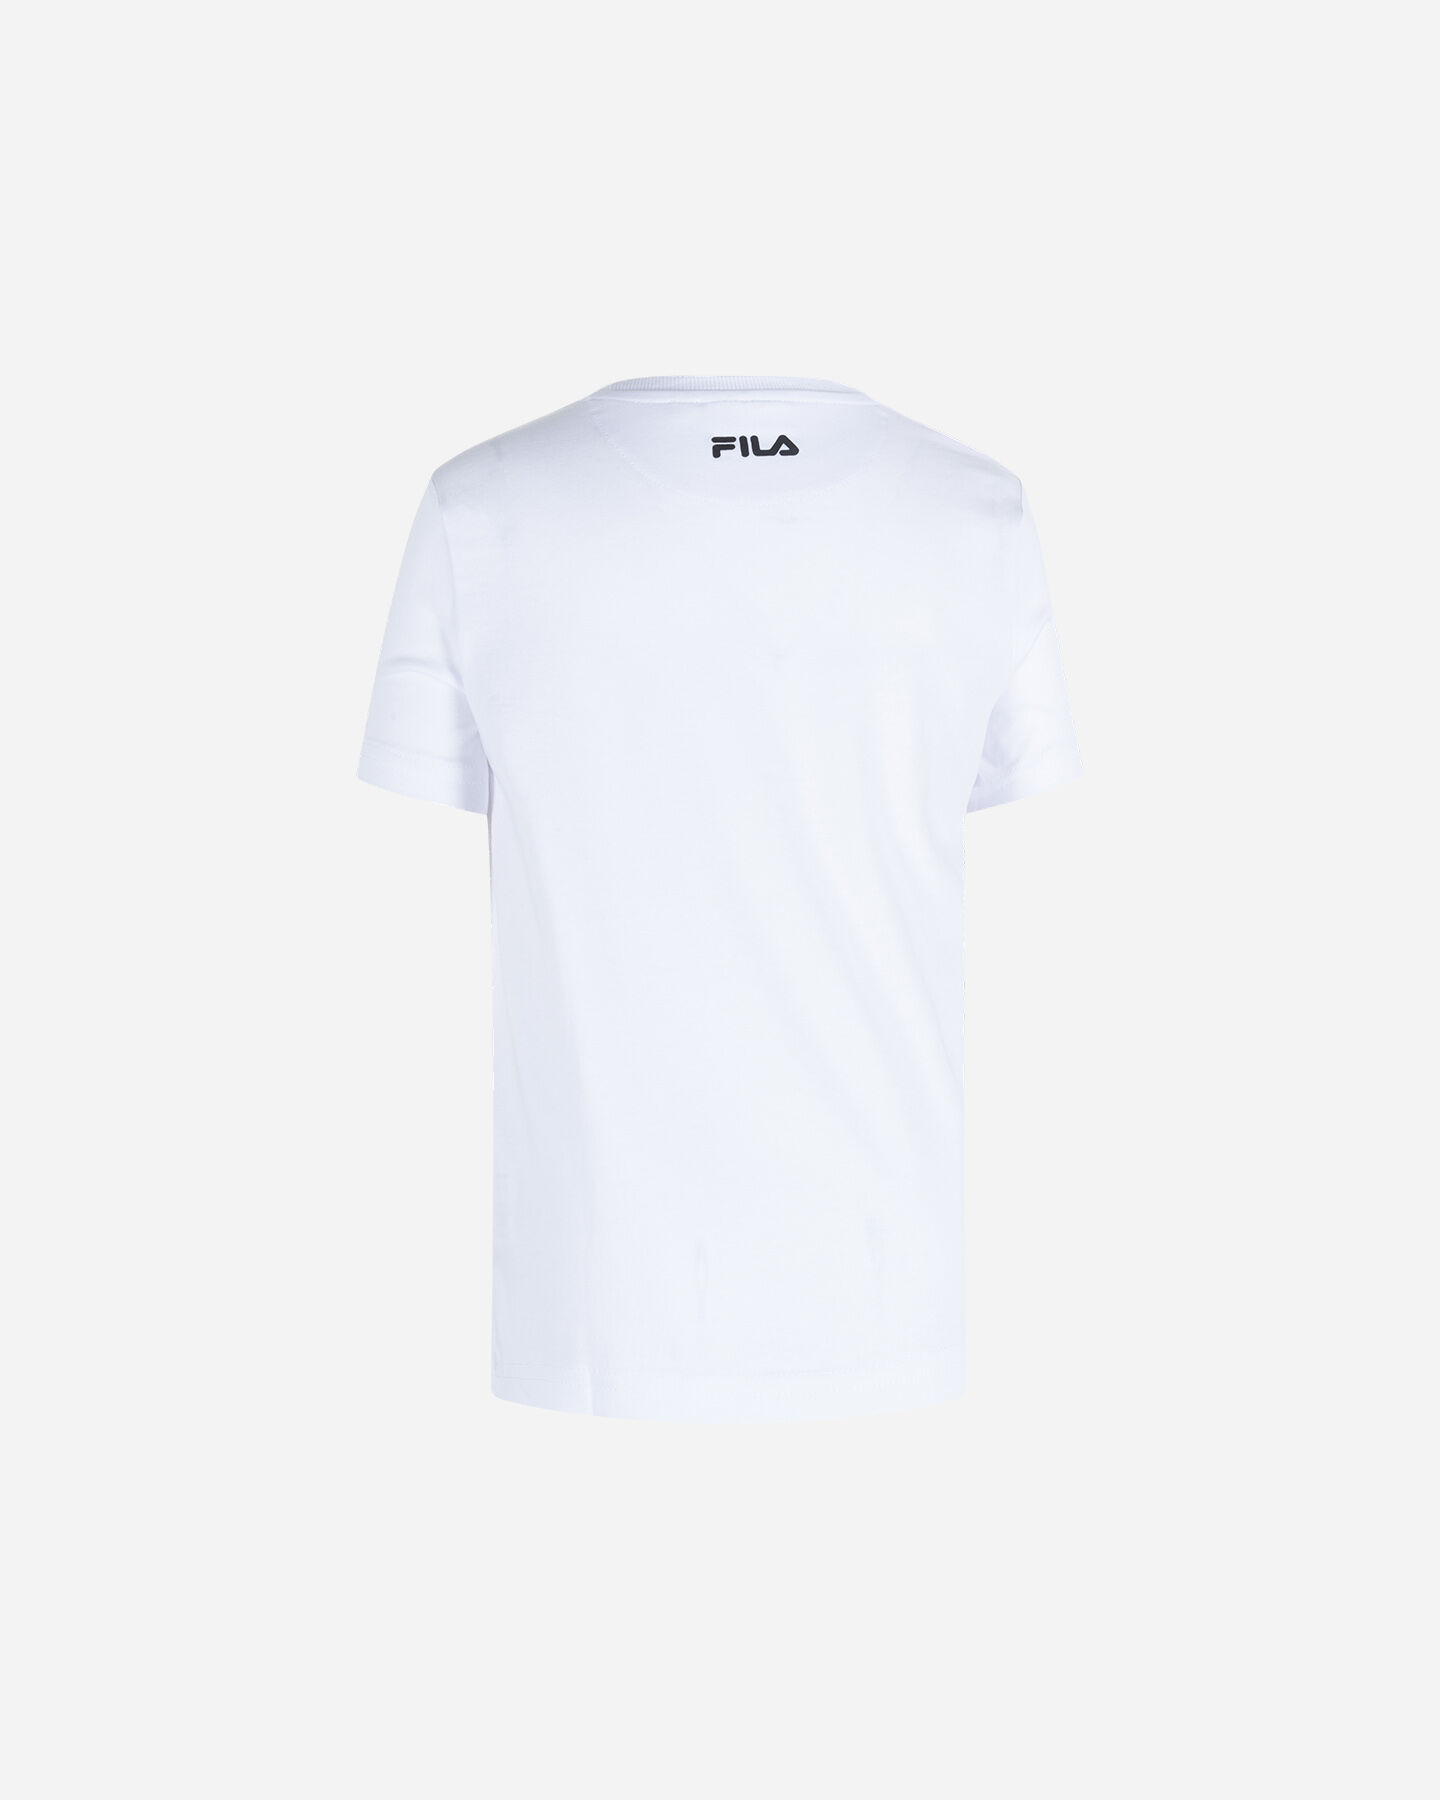  T-Shirt FILA GRAPHIC PUNK JR S4119658|001|14A scatto 1